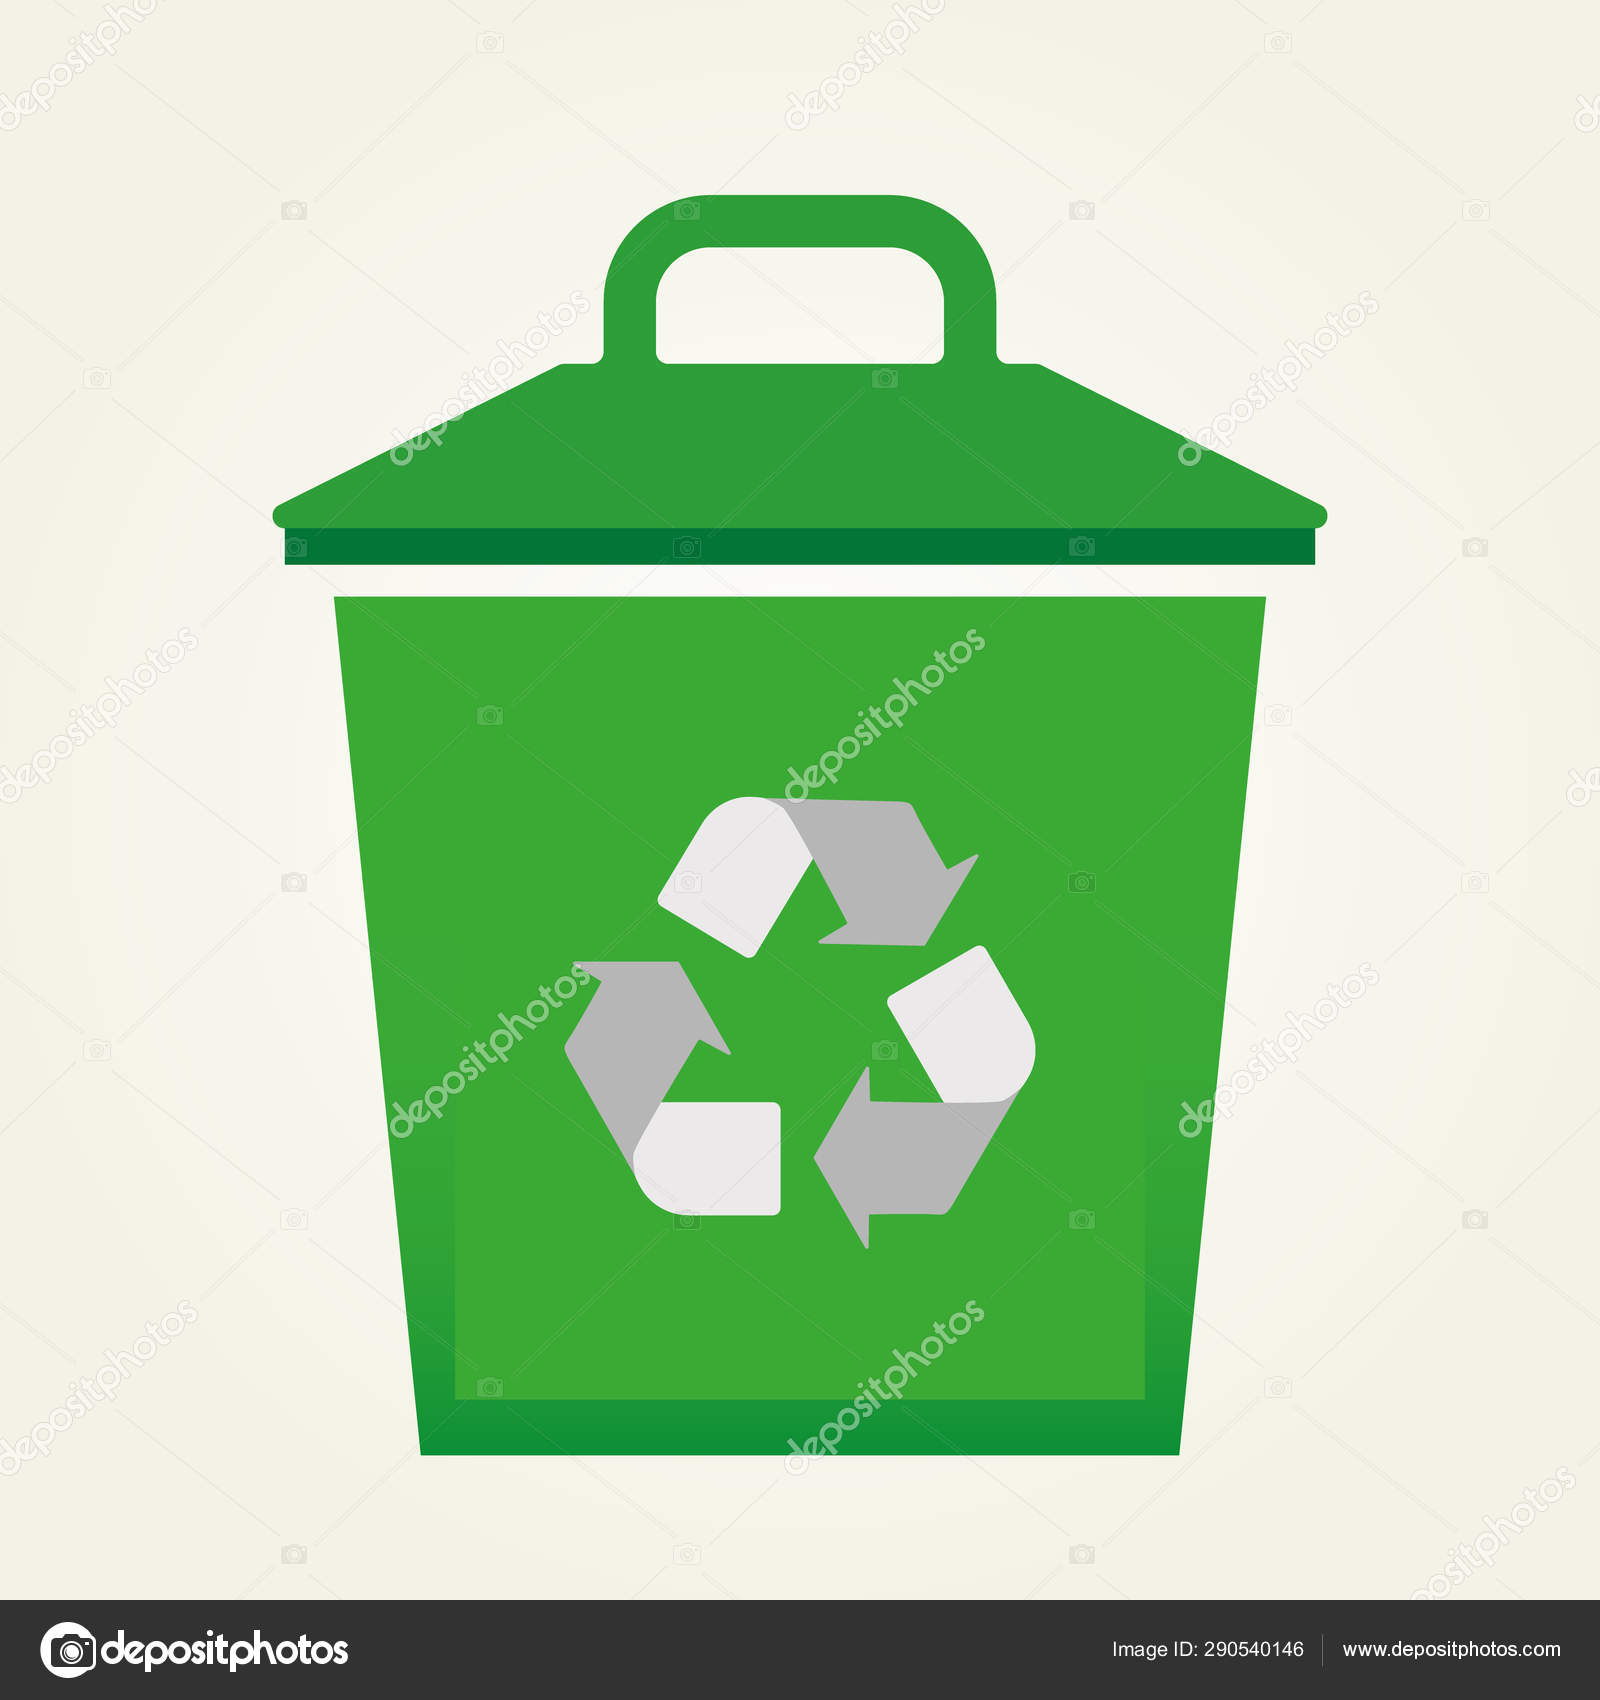 Recycling Bin Trash Box Recycling Trash Icon White Background Vector Illustration Eps 10 Stock Vector C Dariachekman